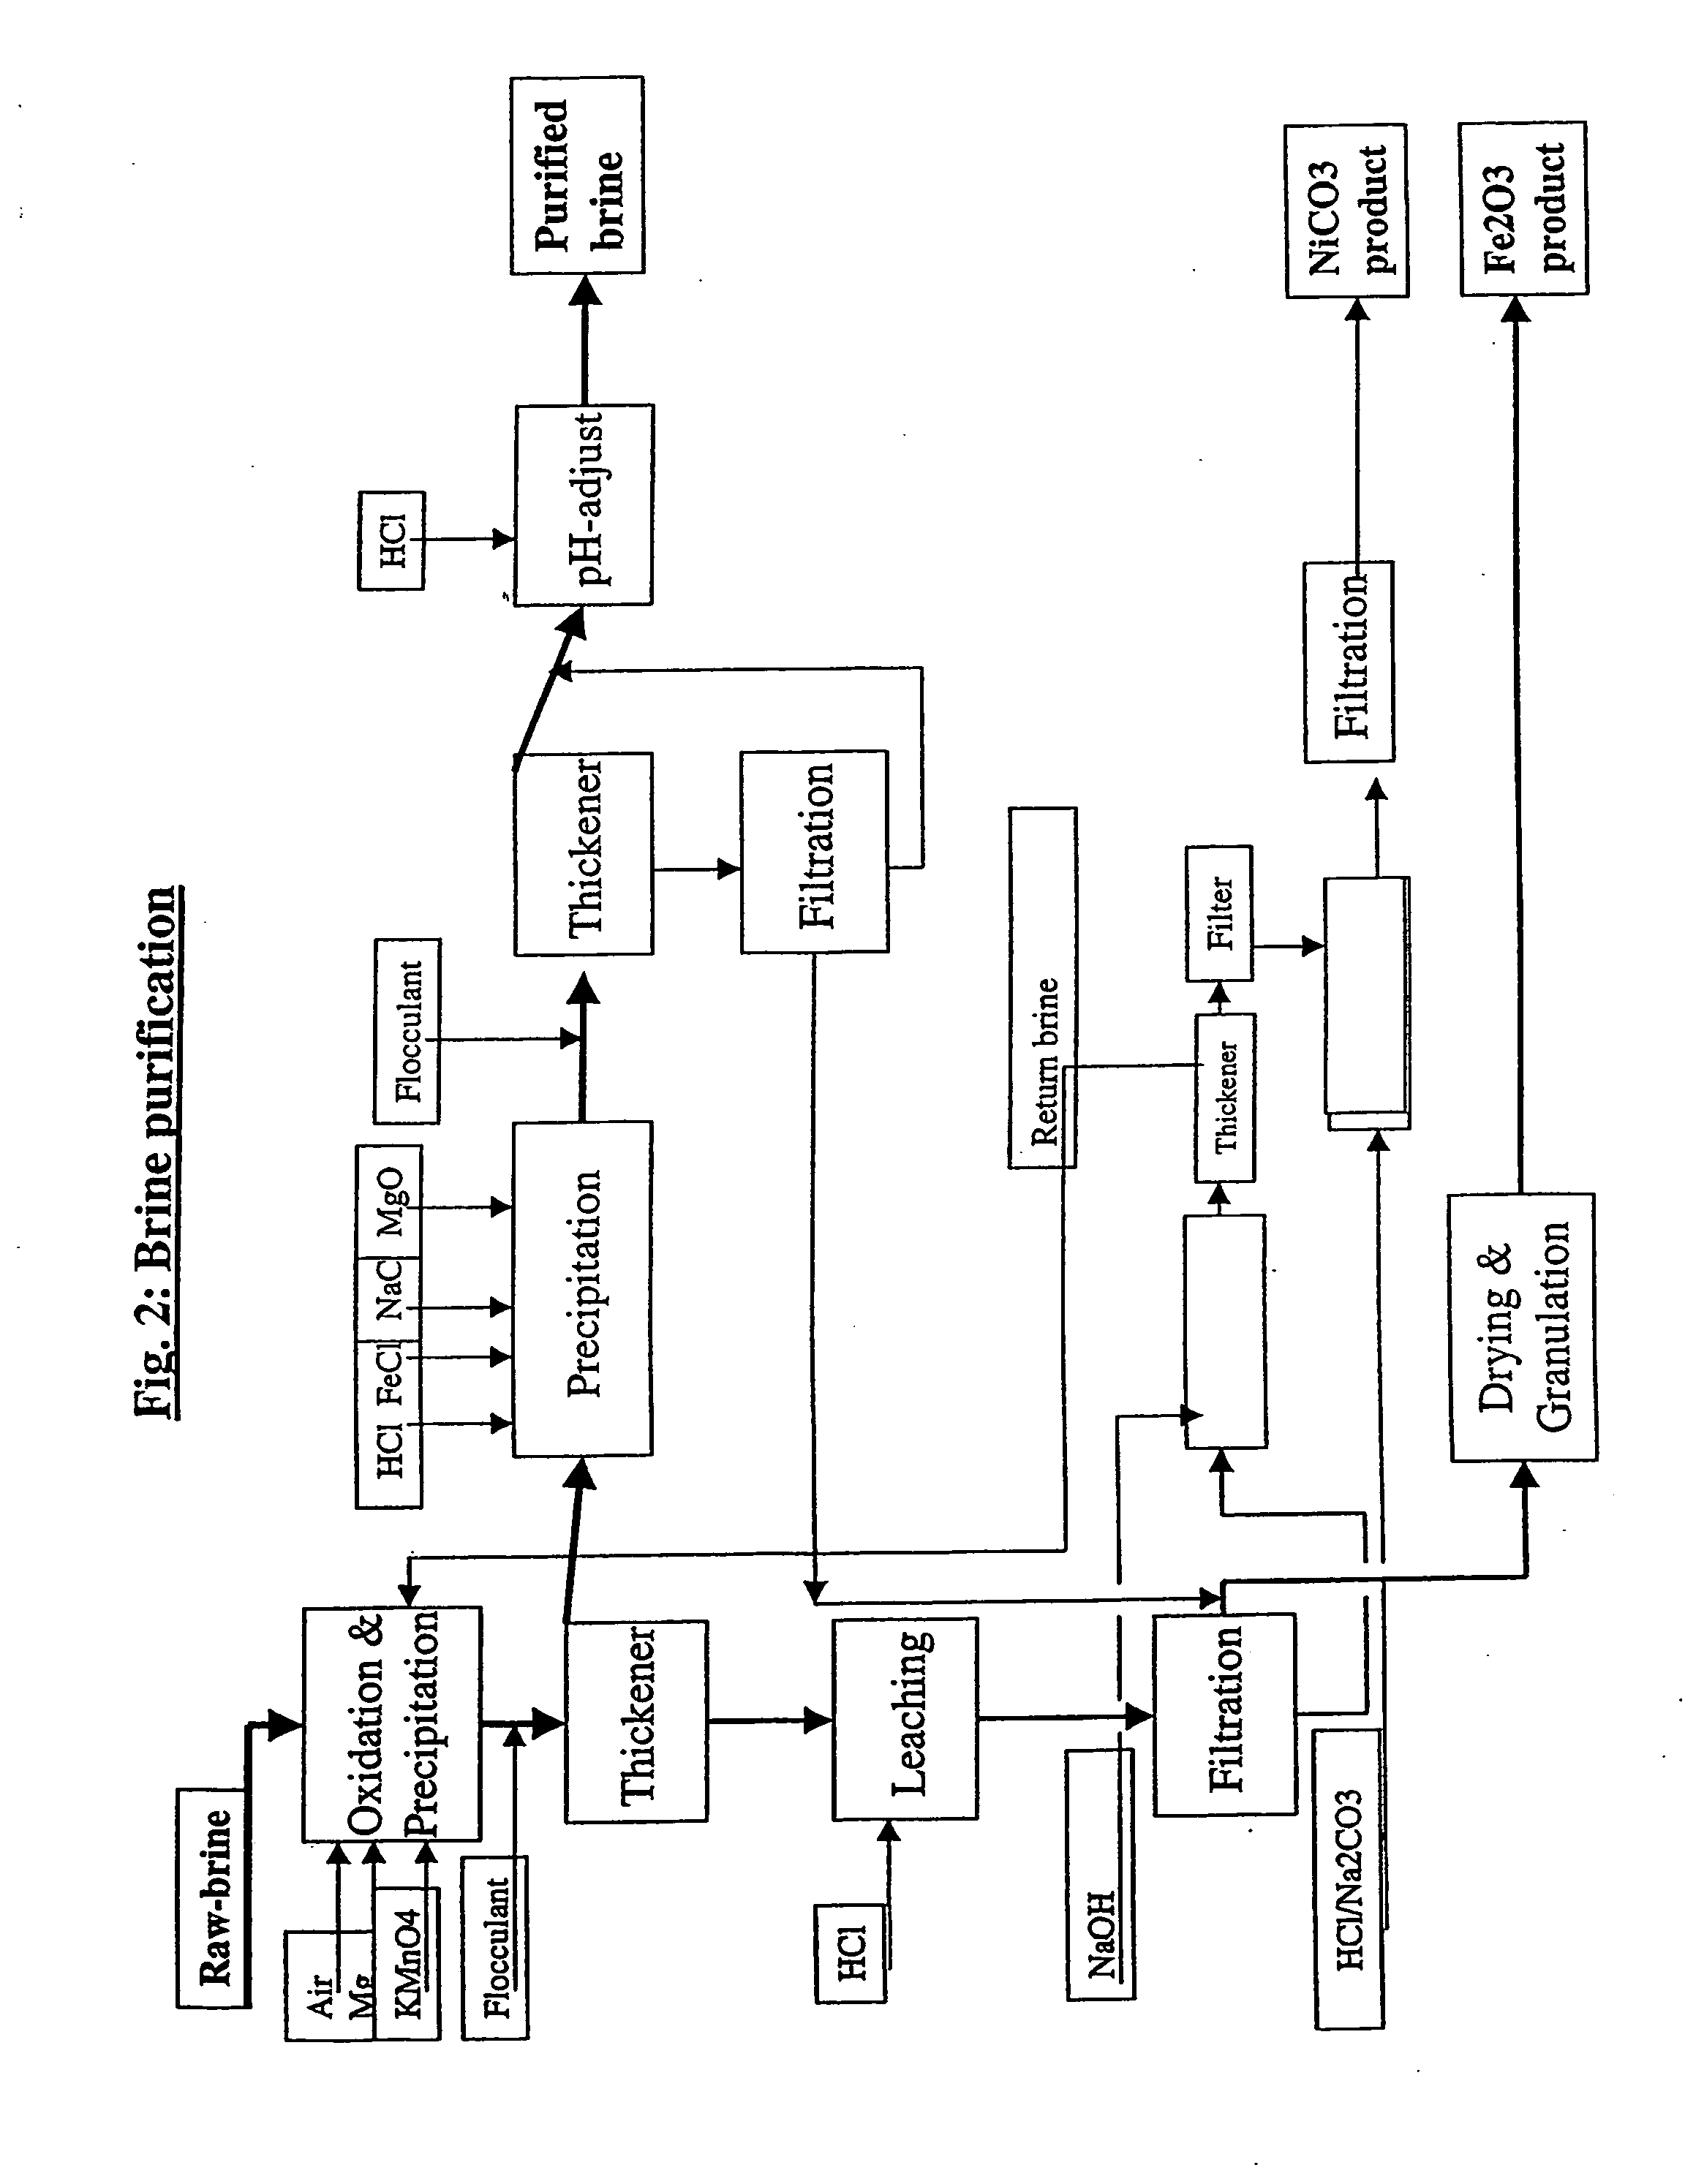 Process for Complete Utilisation of Olivine Constituents